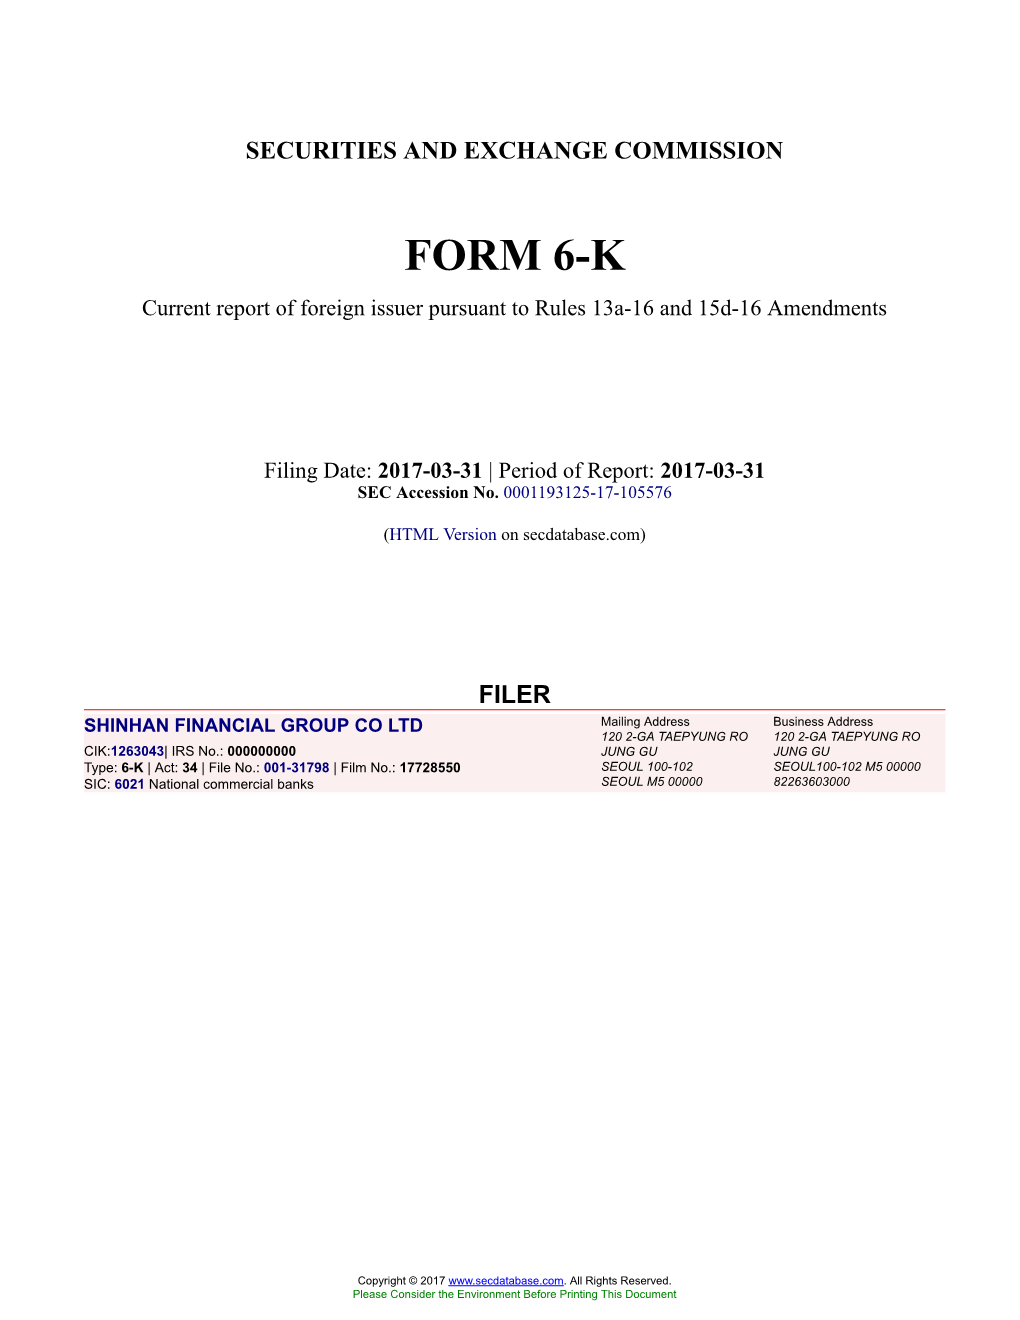 SHINHAN FINANCIAL GROUP CO LTD Form 6-K Current Report Filed